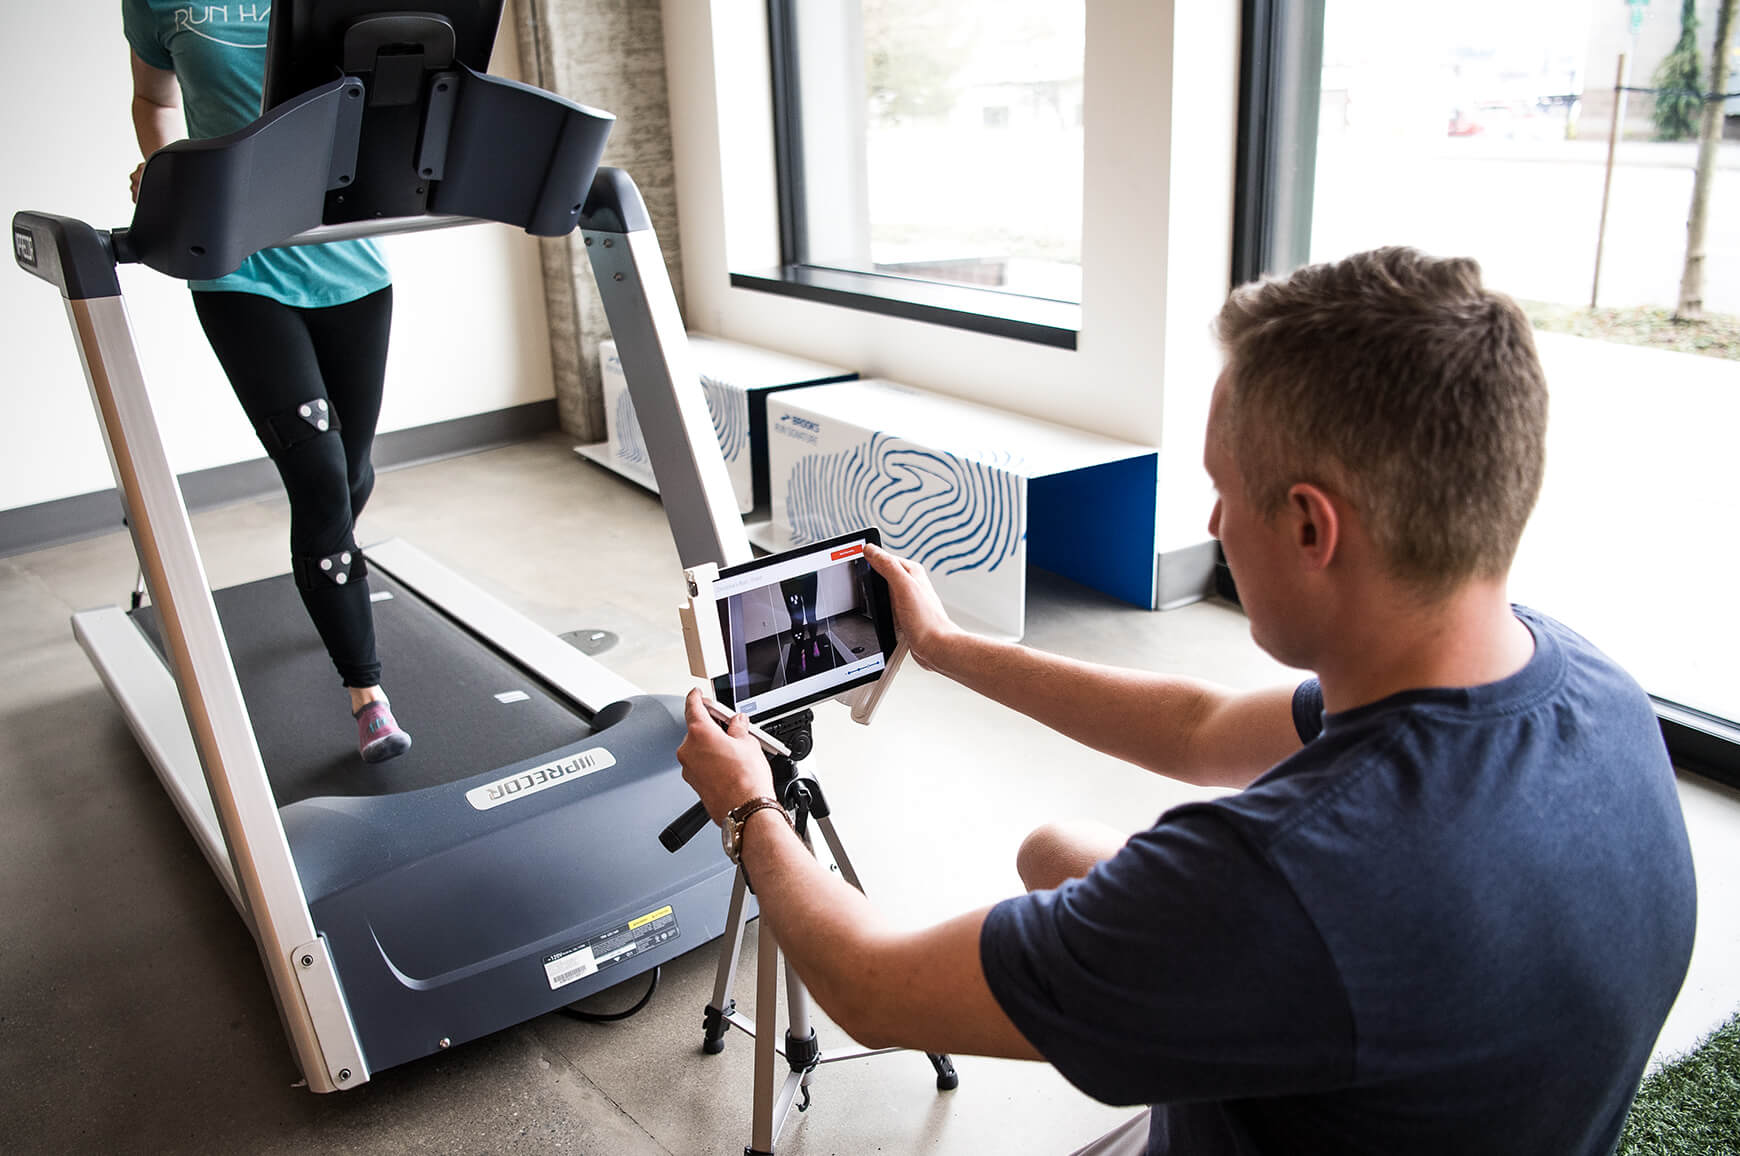 A Brooks employee analyzing a runner's gait on a treadmill